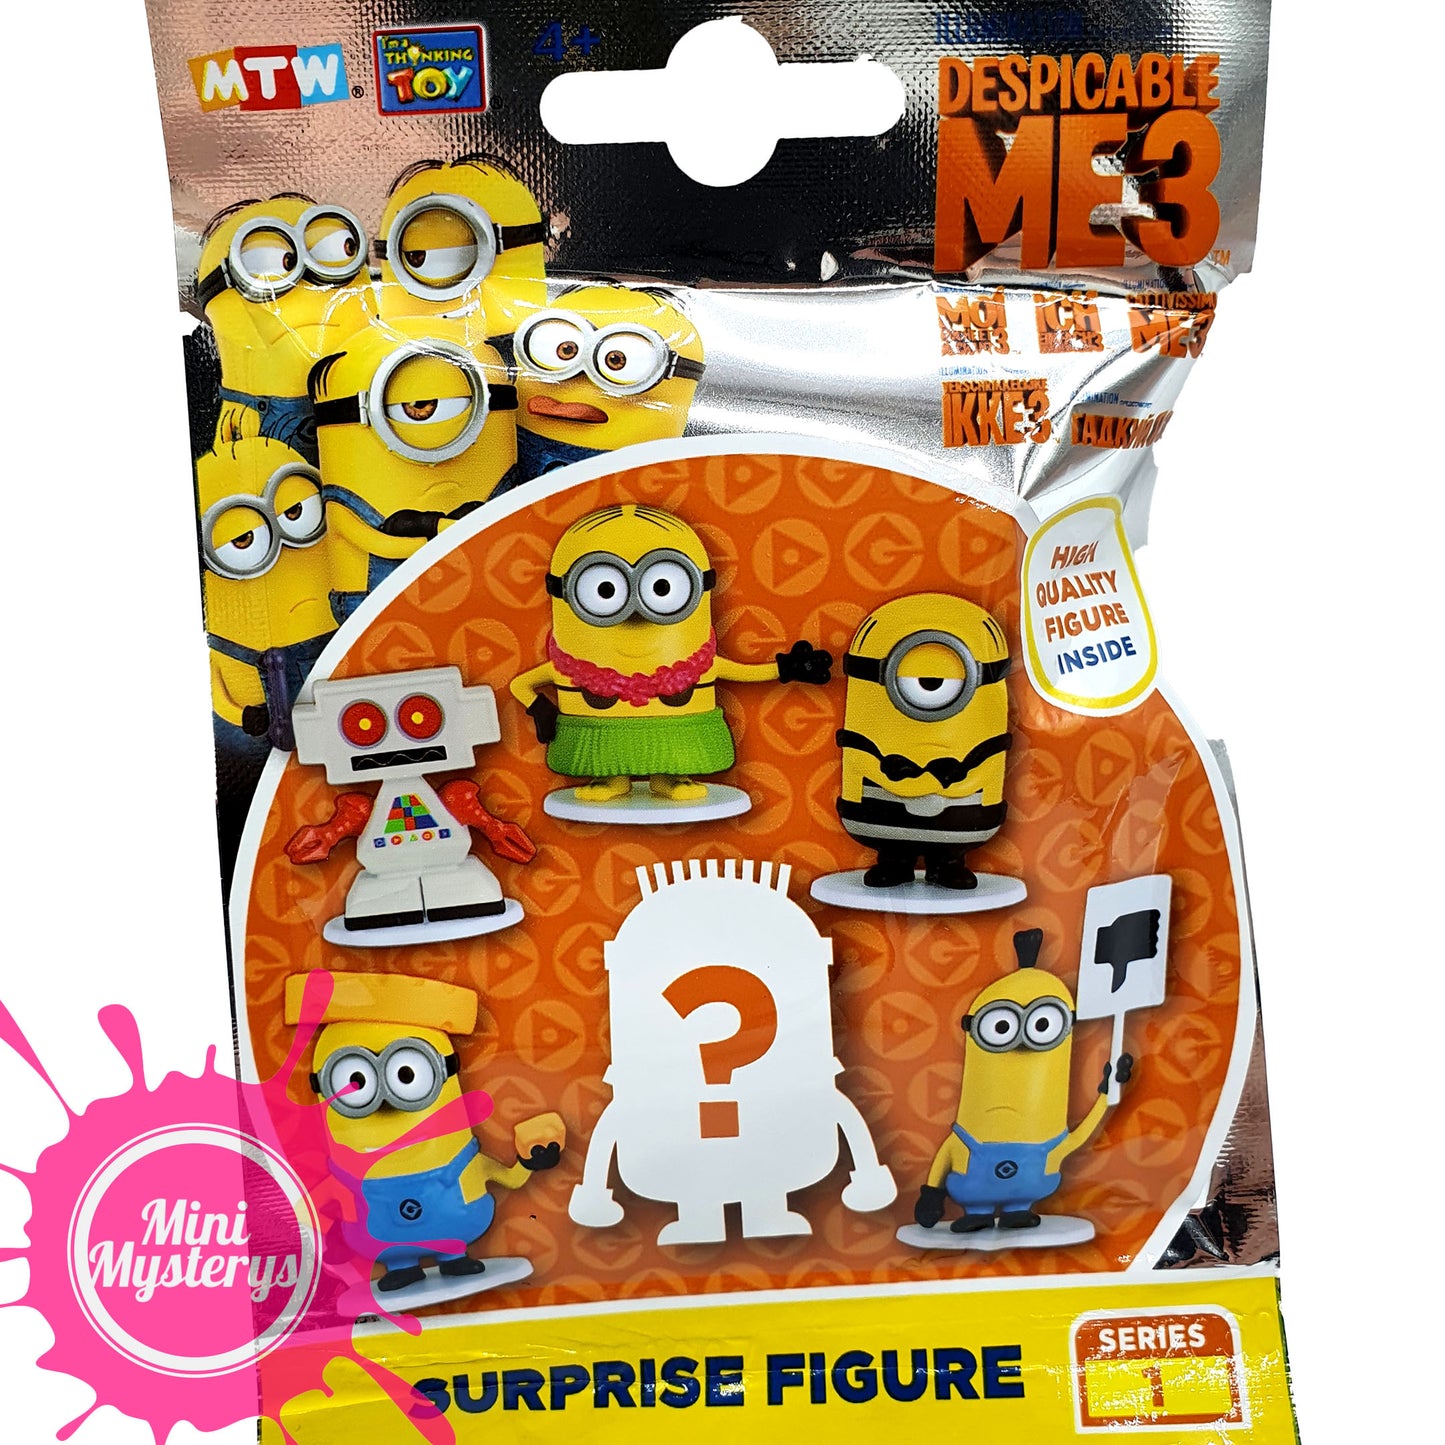 Girls Toy Bundle - 7 Toys inc Hatchimals CollEGGtibles, Bananas, Disney, Minions Blind Bags (Girls Gift Ideas)